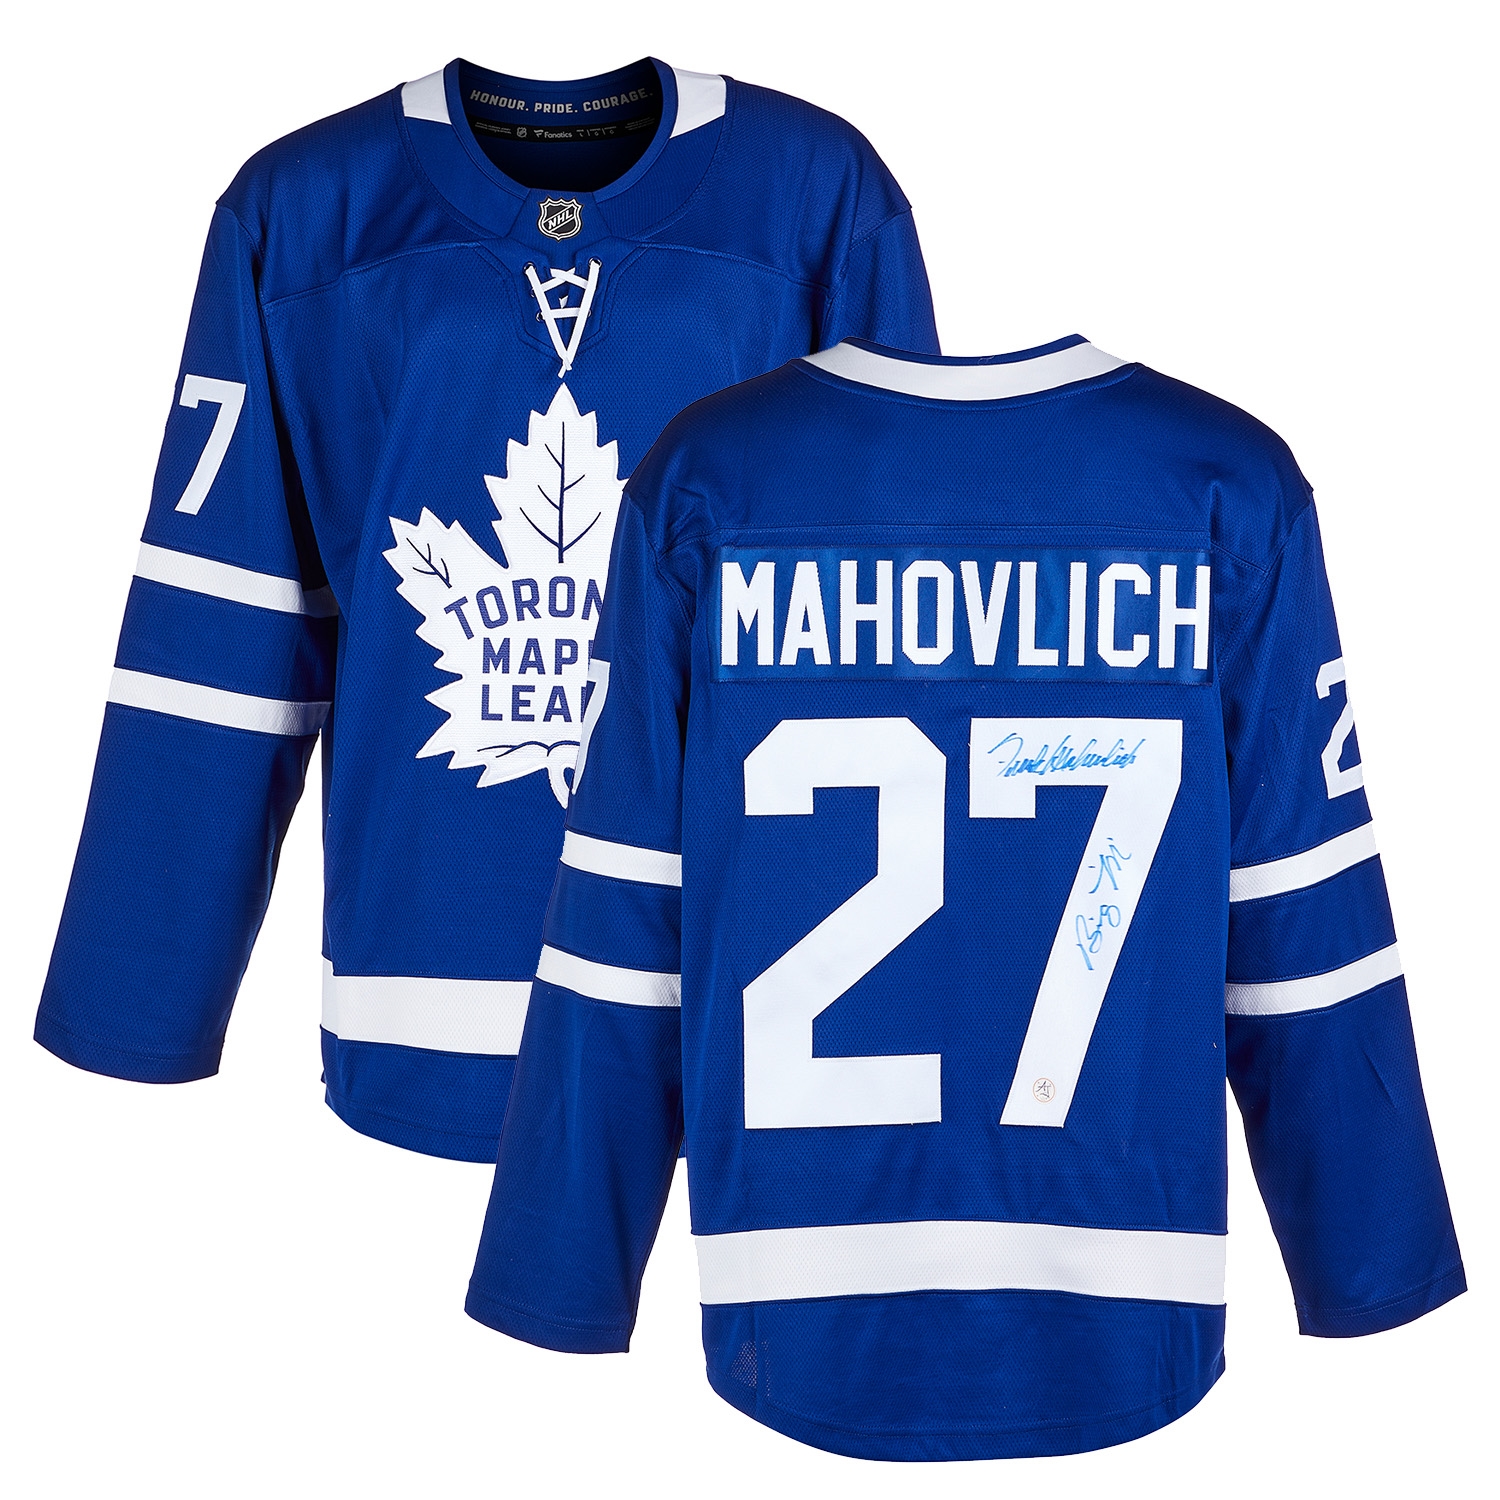 Frank Mahovlich Autographed Toronto Maple Leafs Fanatics Jersey